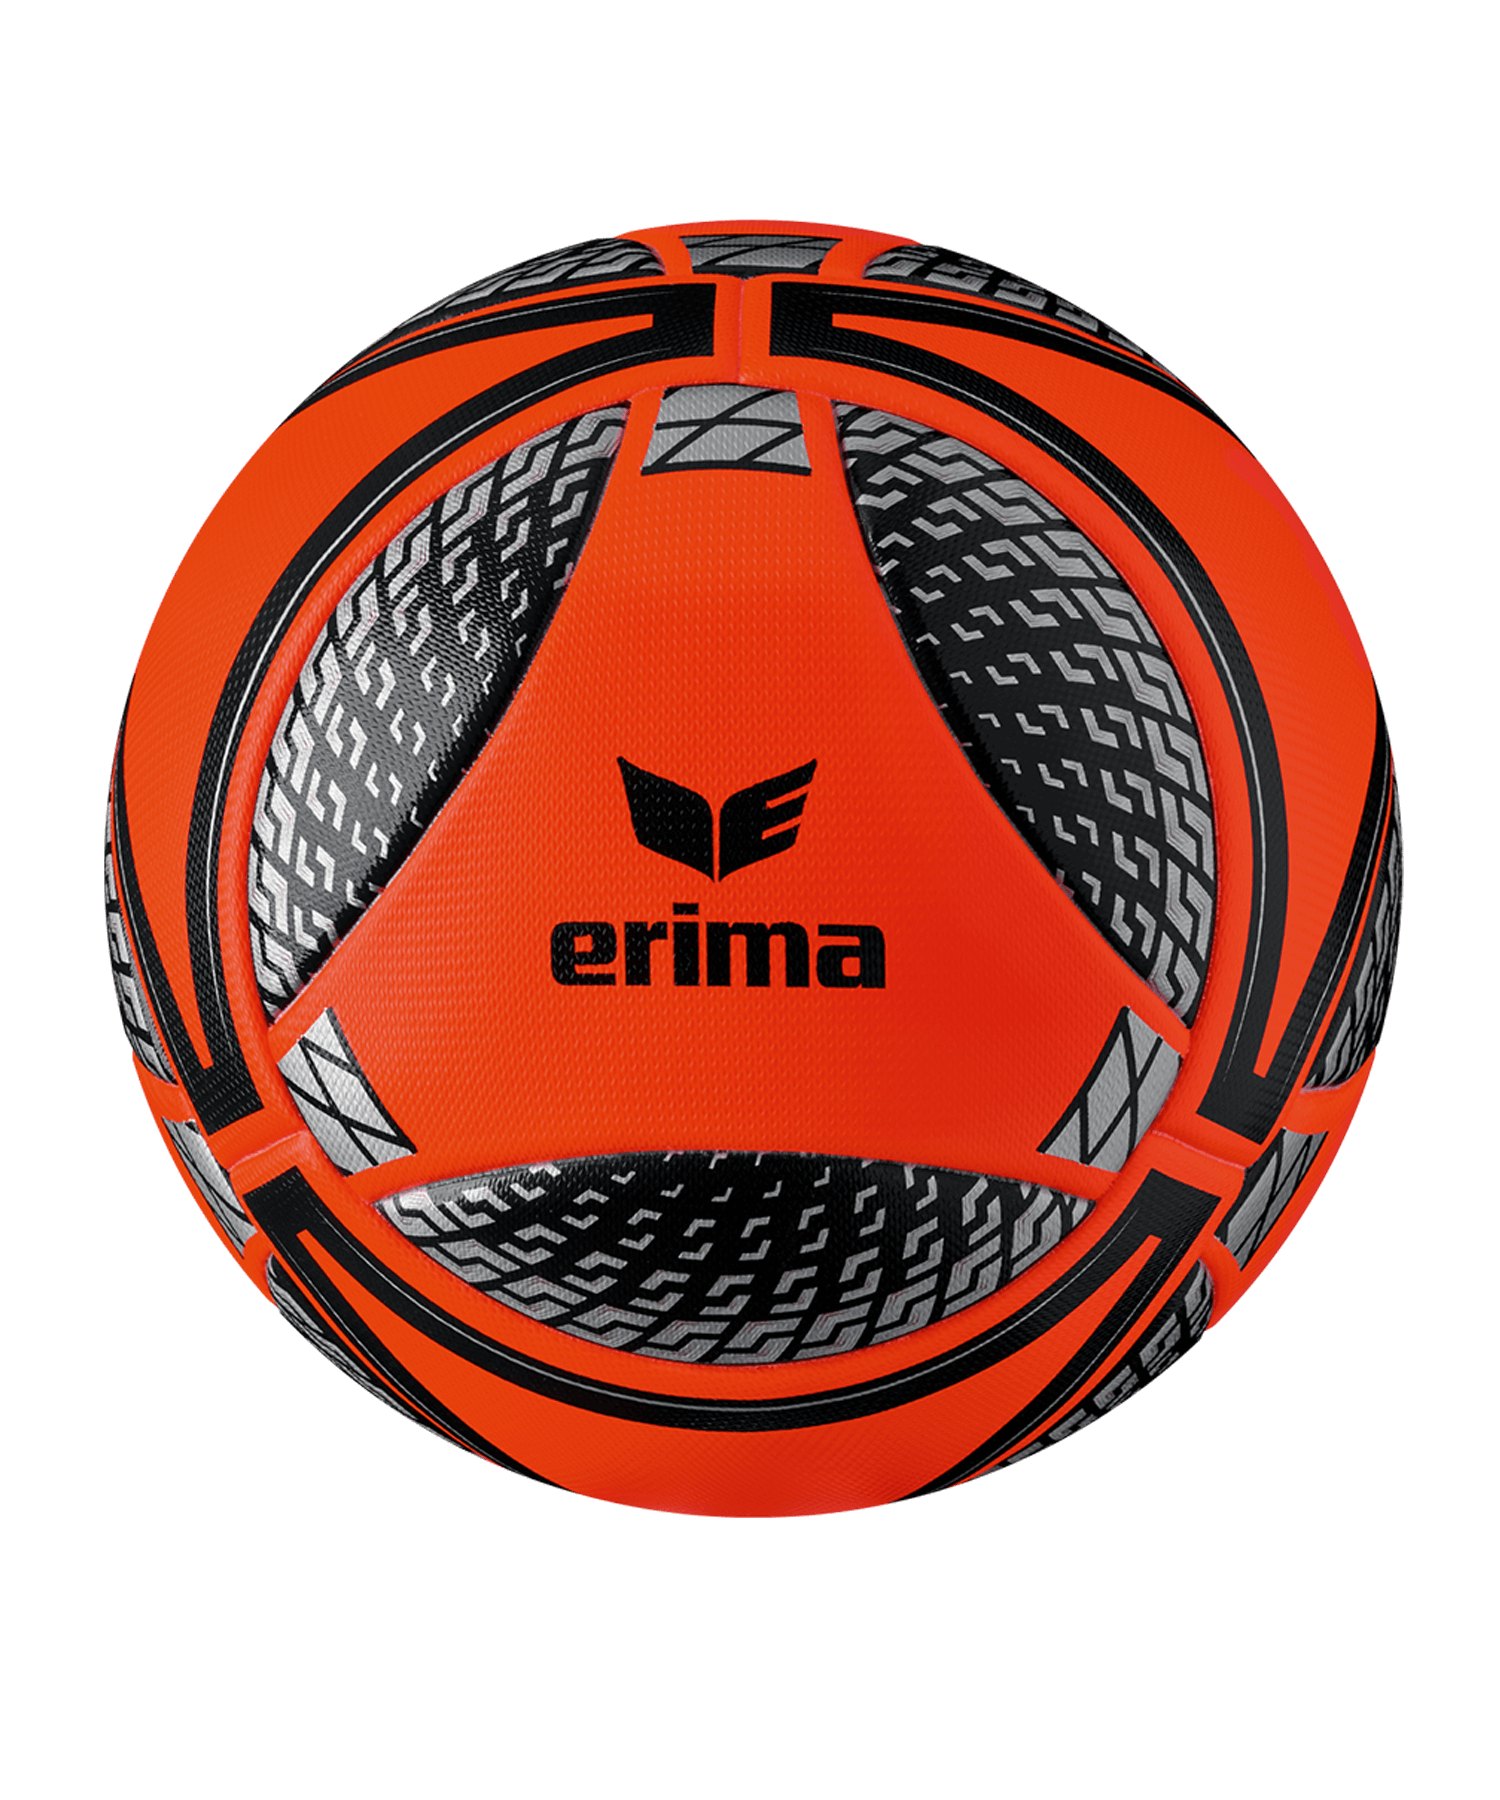 Erima Senzor Match Winterspielball Orange Schwarz - orange